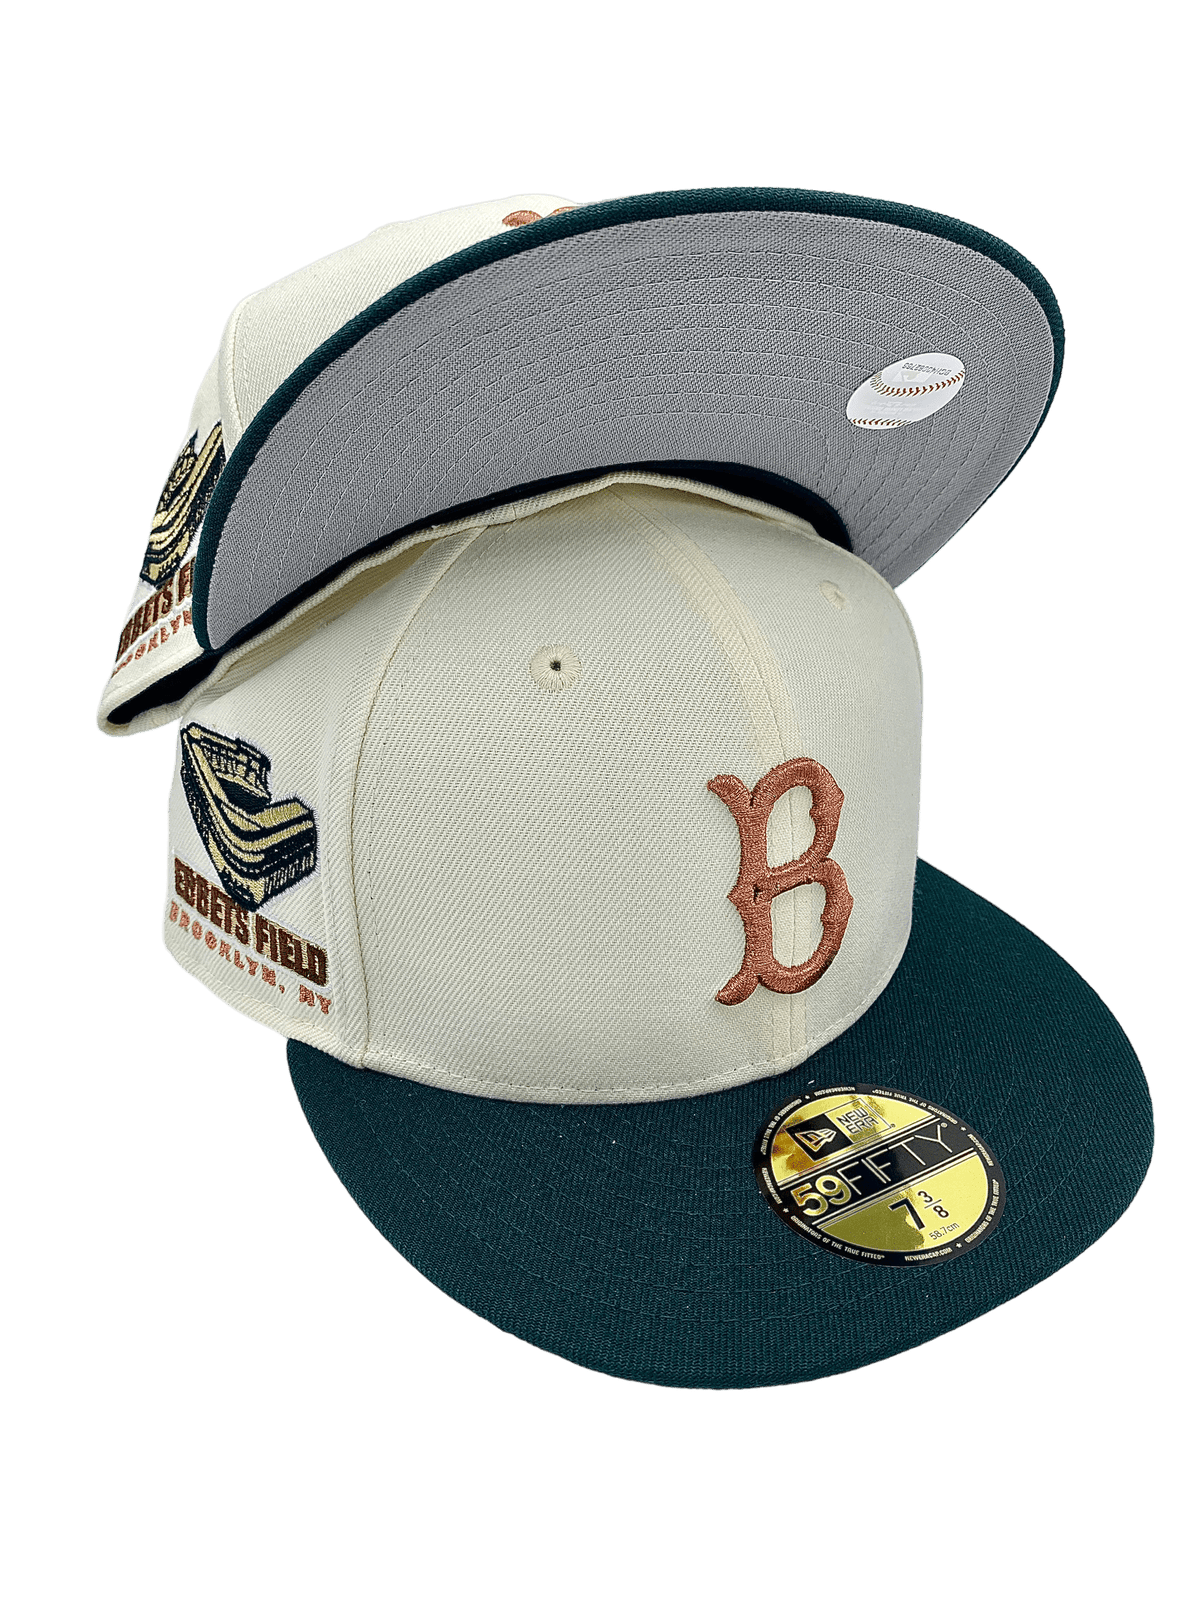 Men's Boston Bruins Mitchell & Ness Cream/Black Vintage Snapback Hat